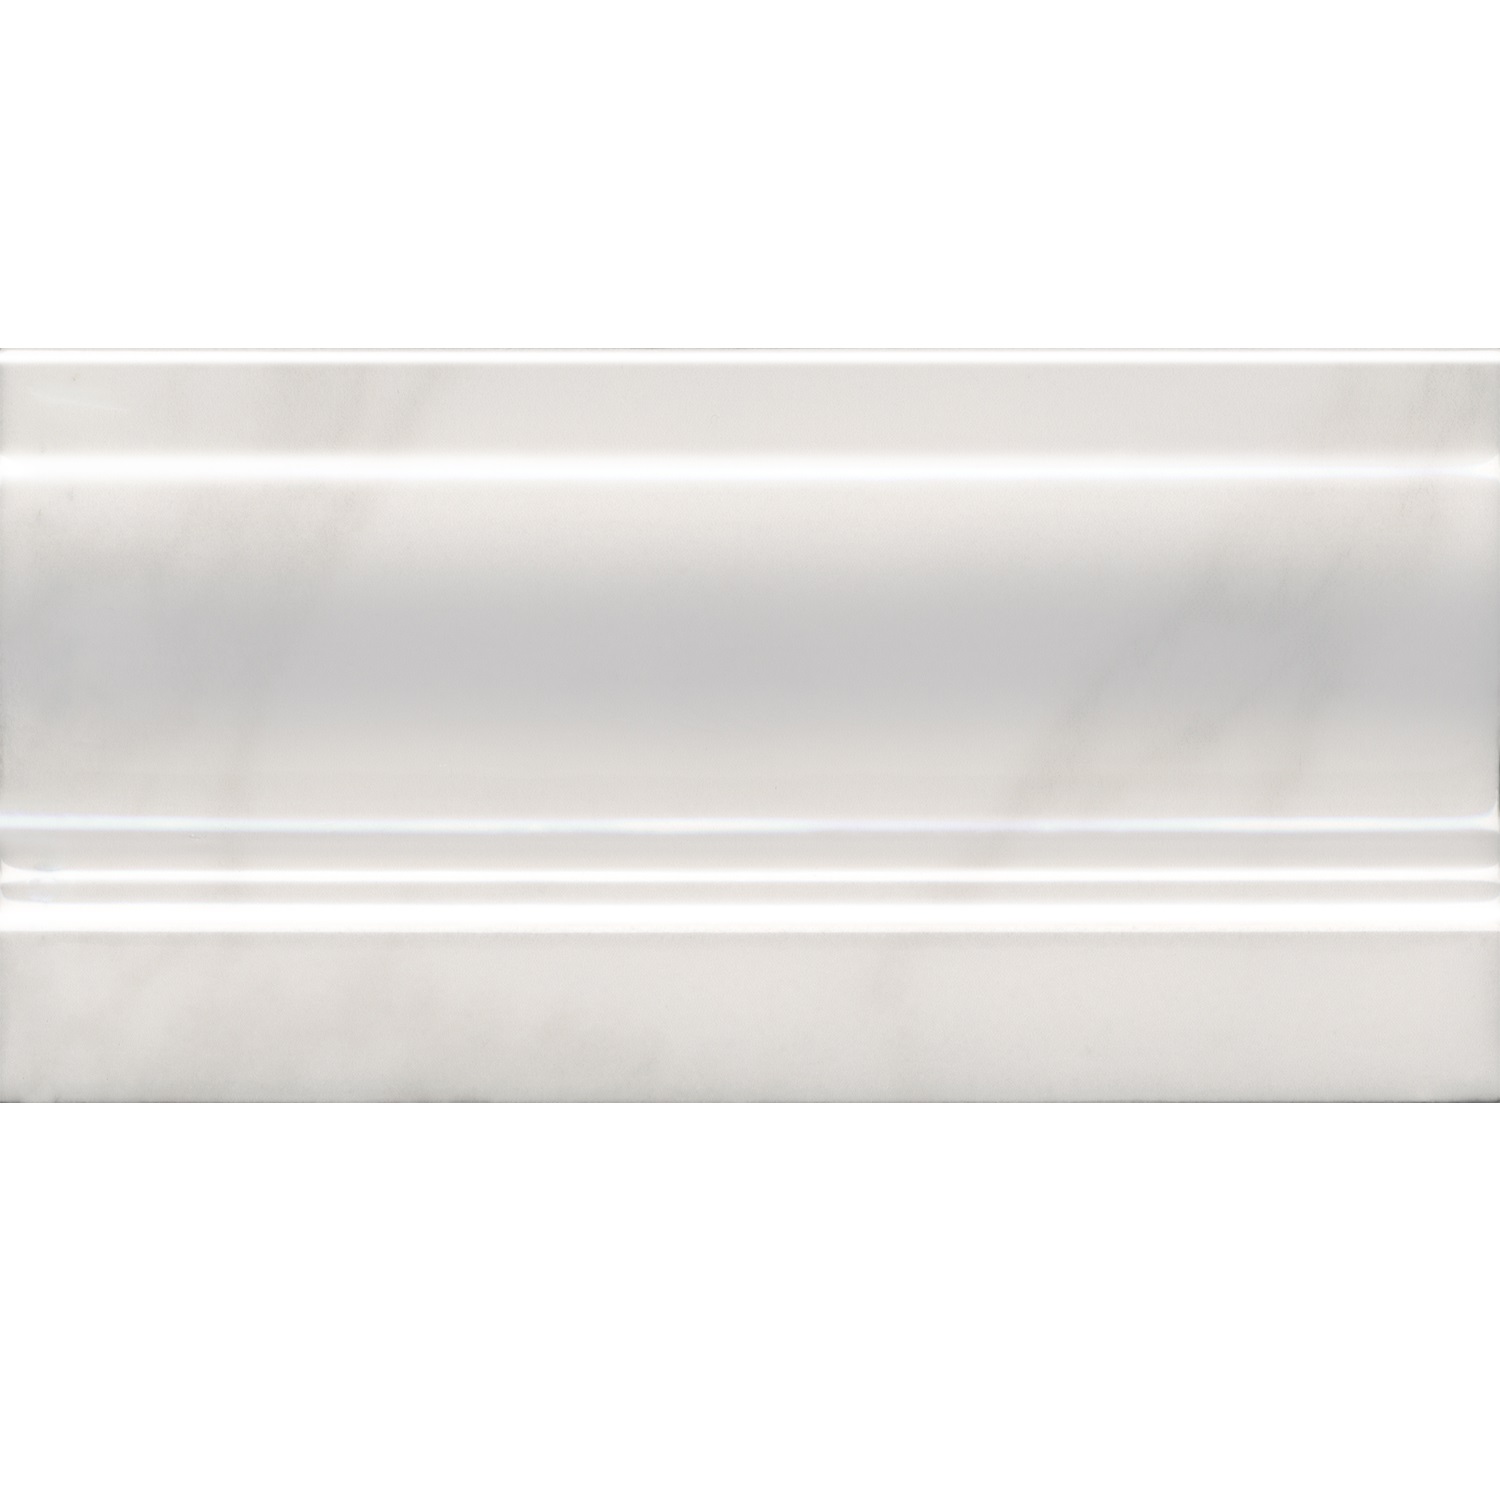 Плитка Kerama Marazzi Висконти плинтус белый FMD020 20x10x1,3 см